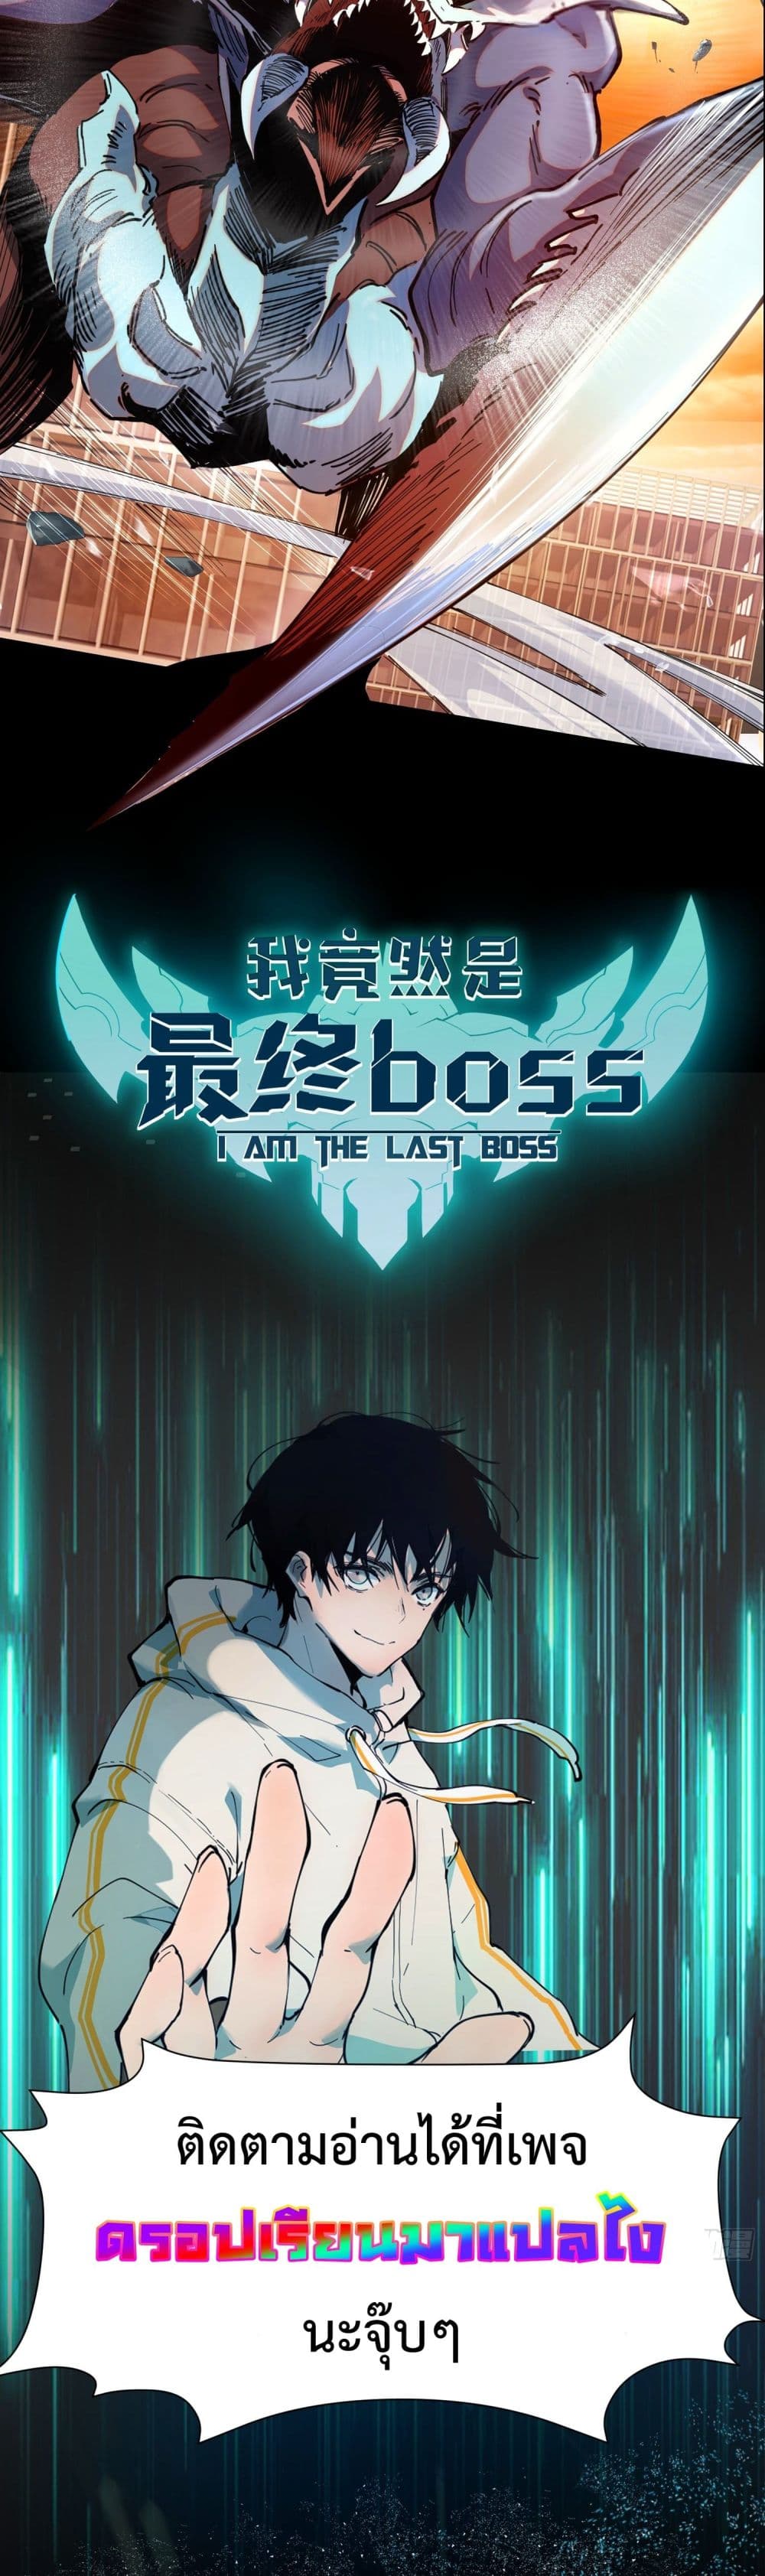 I am the Last Boss 0.1-0.1